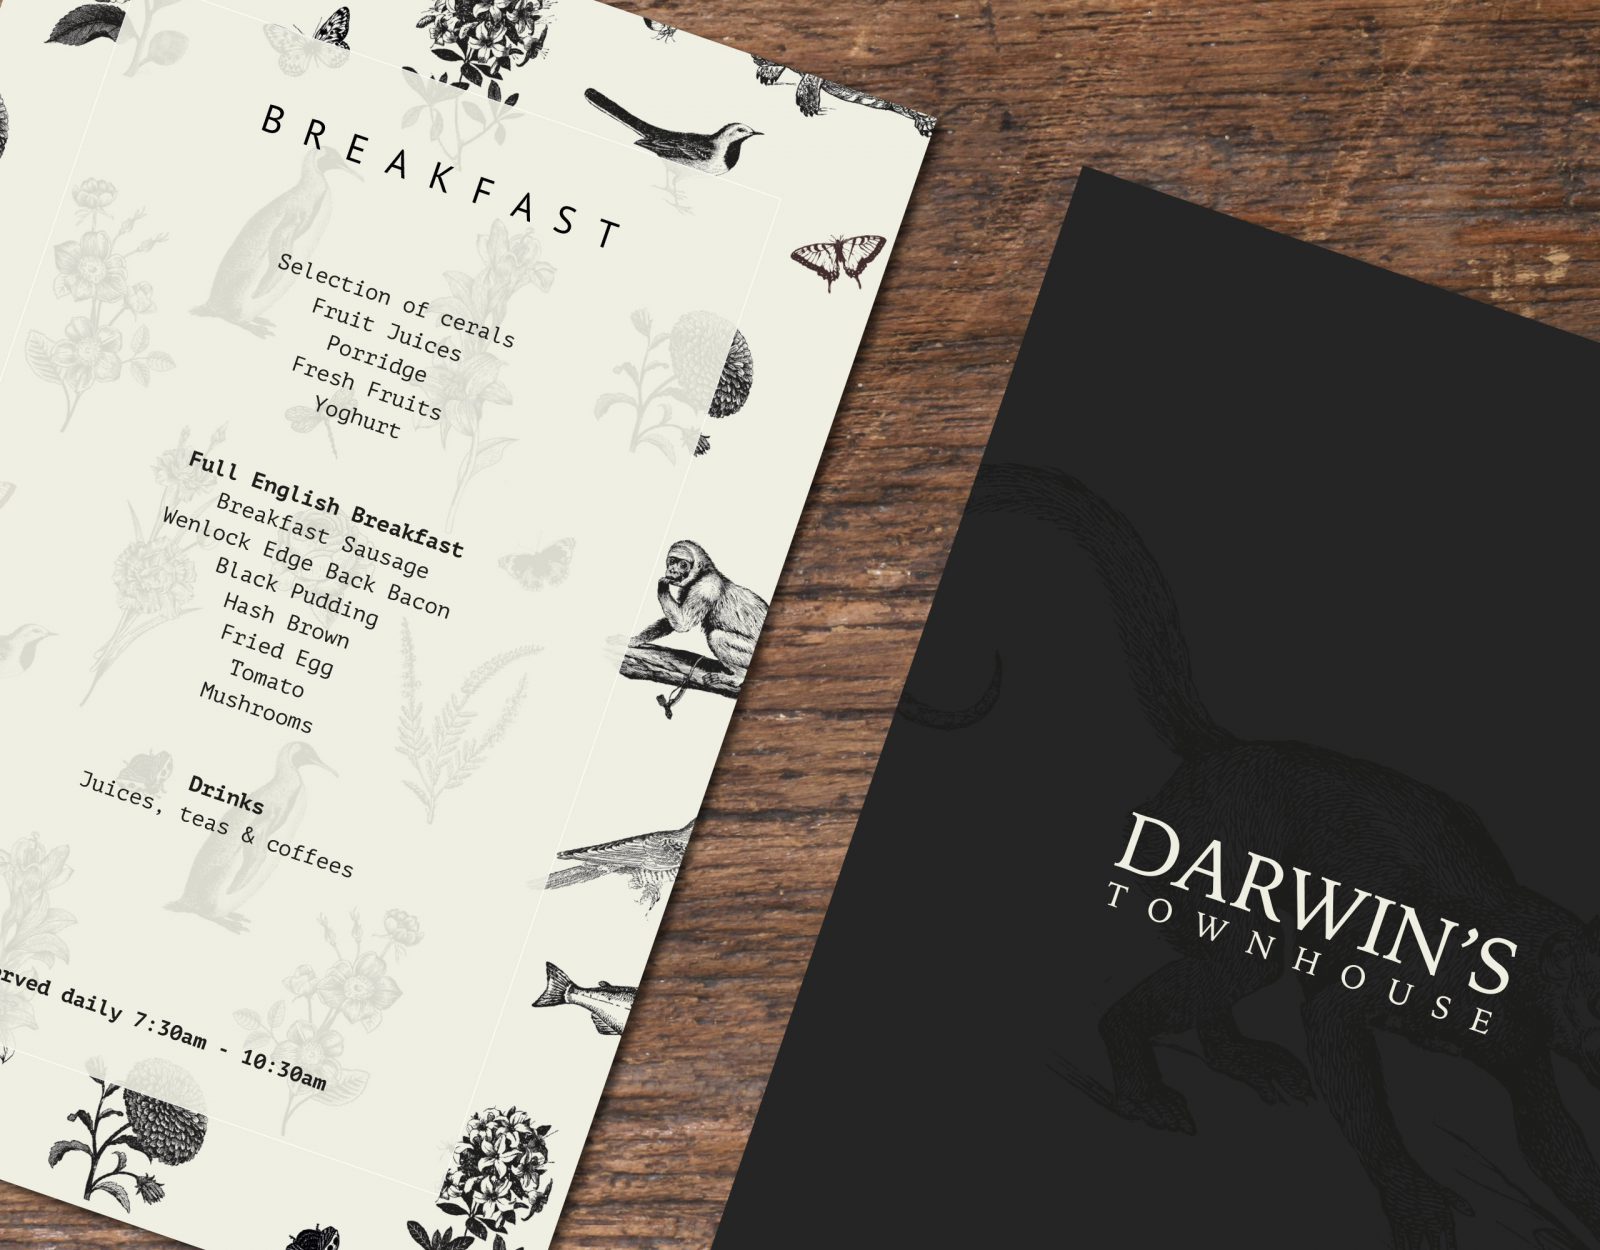 Darwin's Townhouse menu